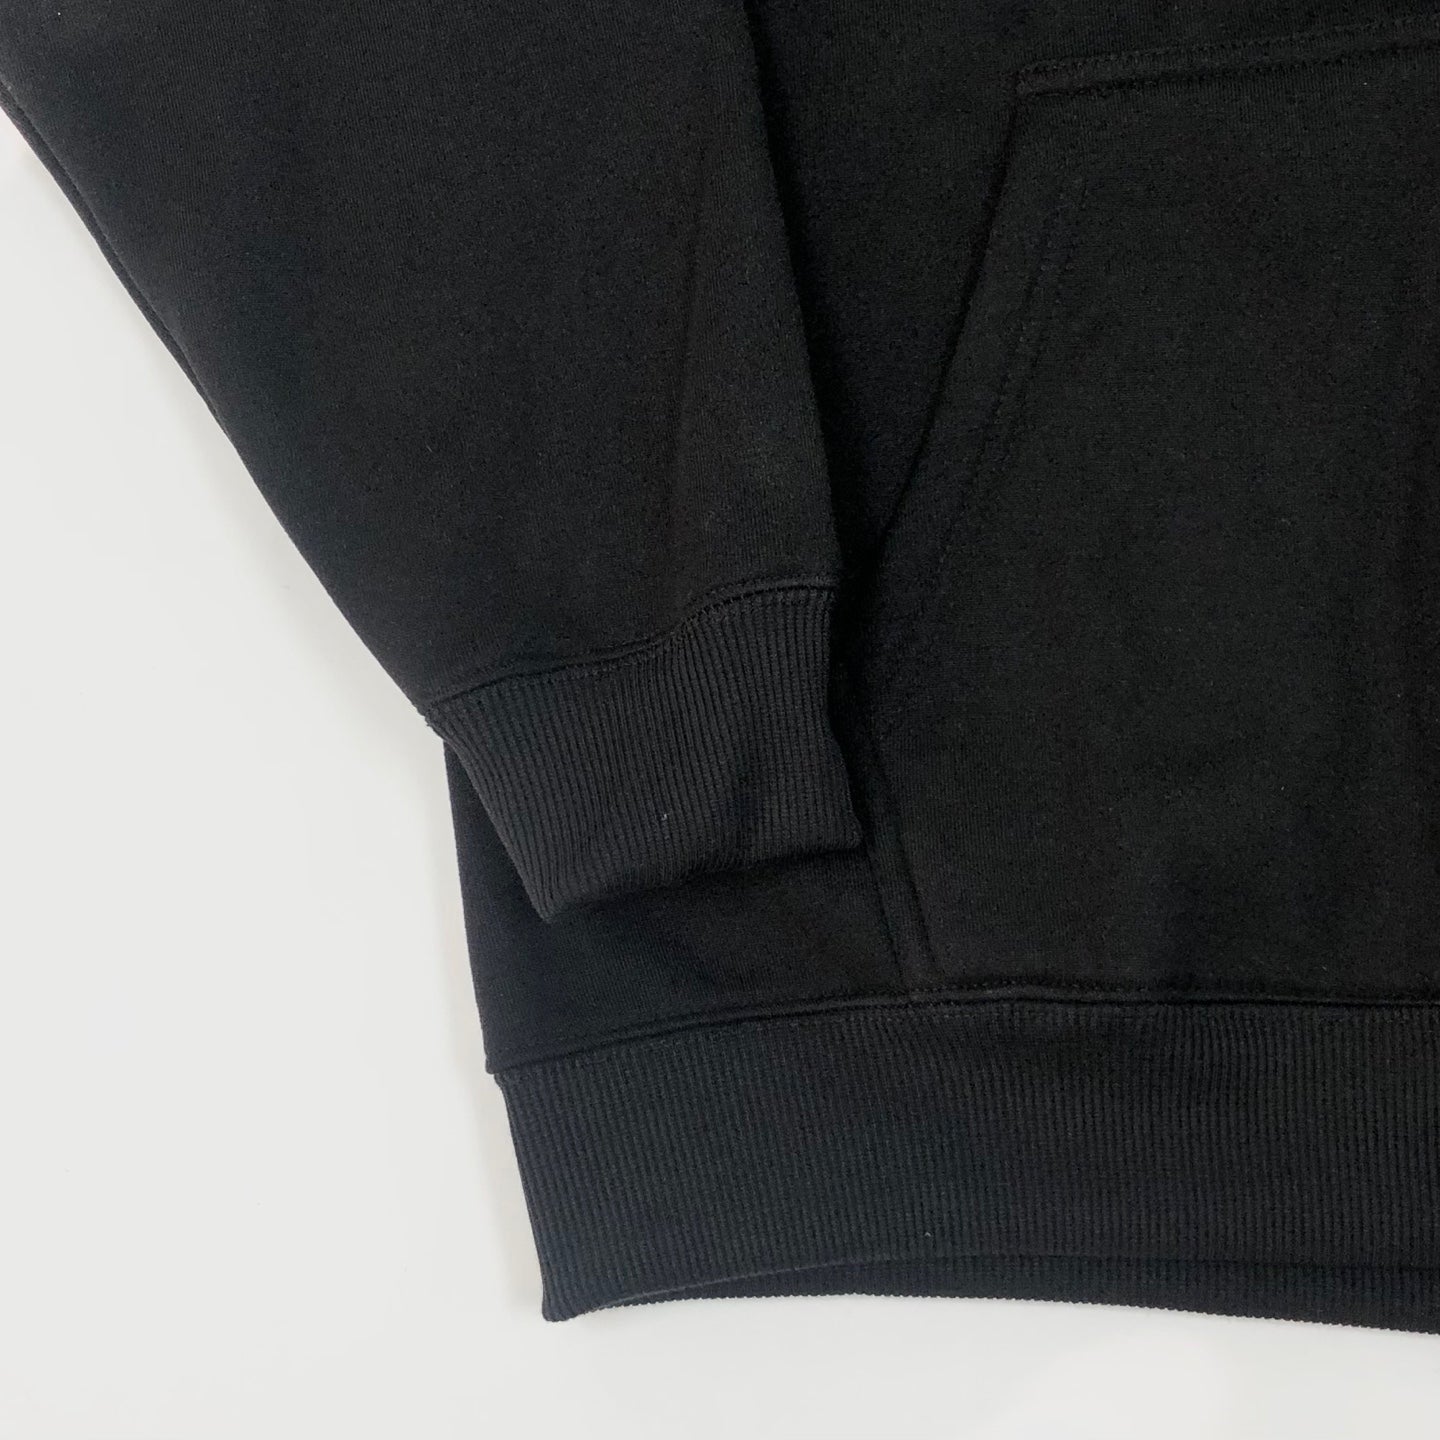 Basic Zip Up Fleece Hoodie Jacket (5 Colors)